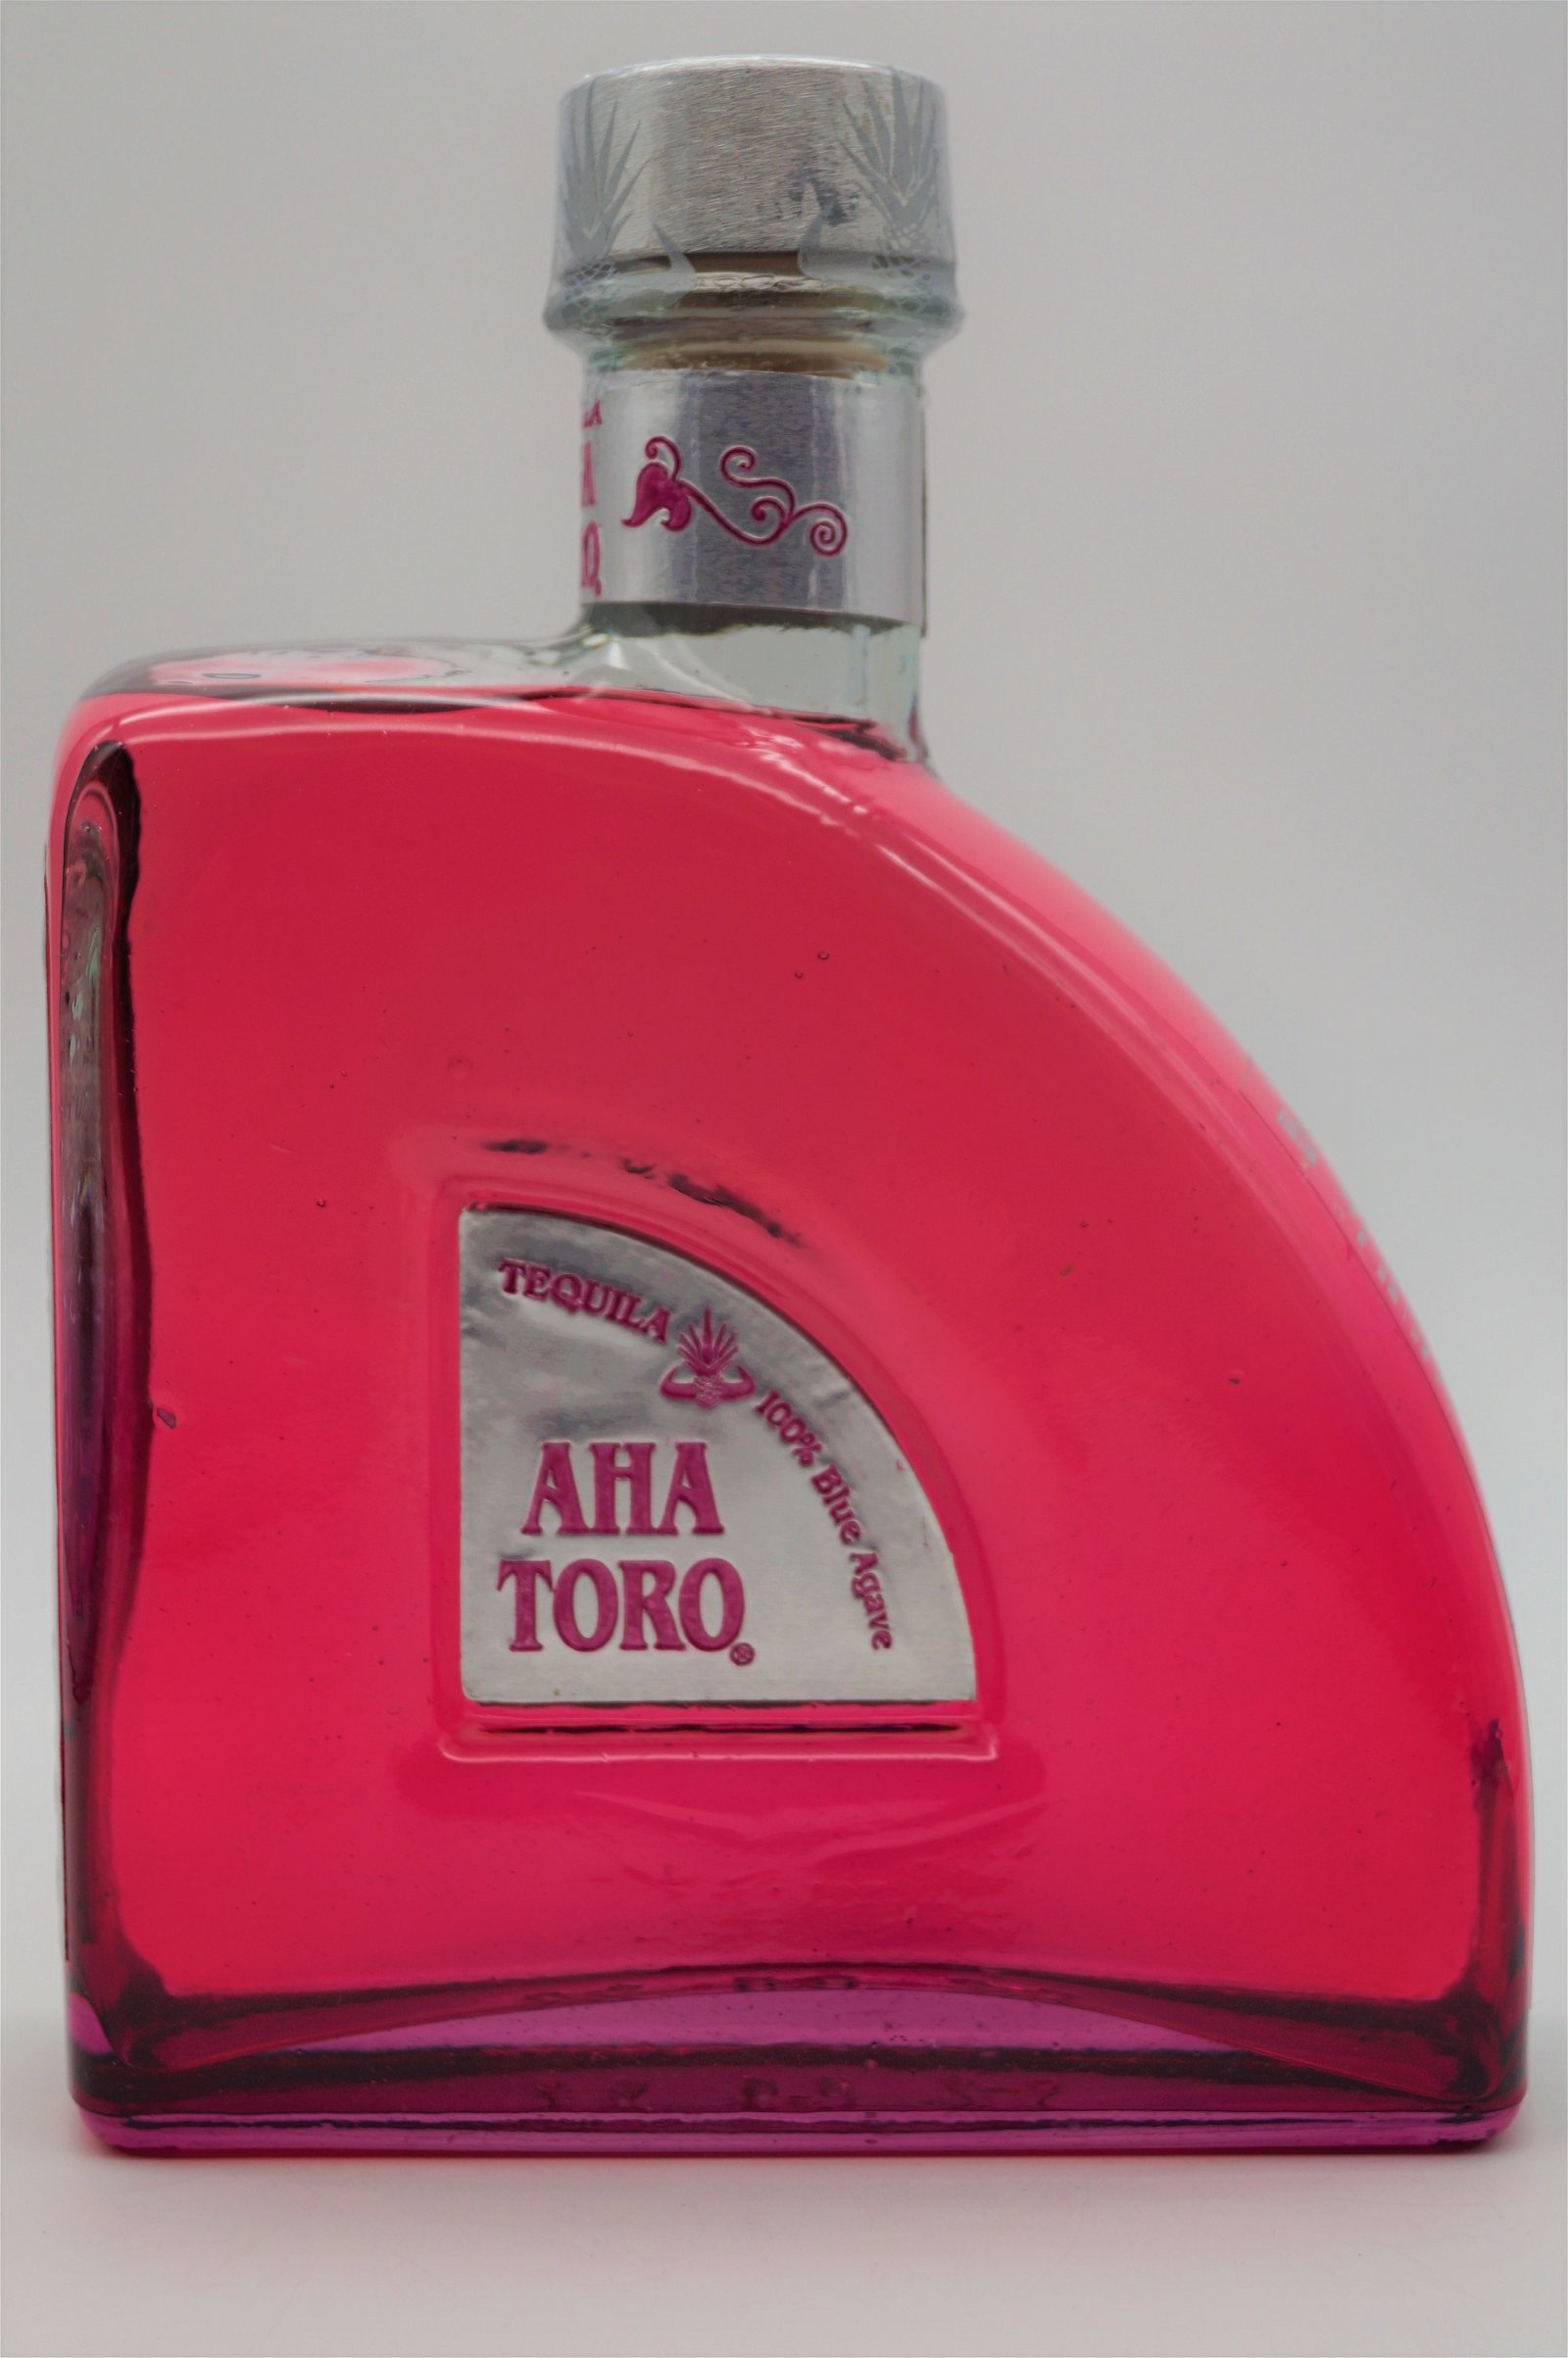 Aha Toro Tequila Diva Plata Rosa